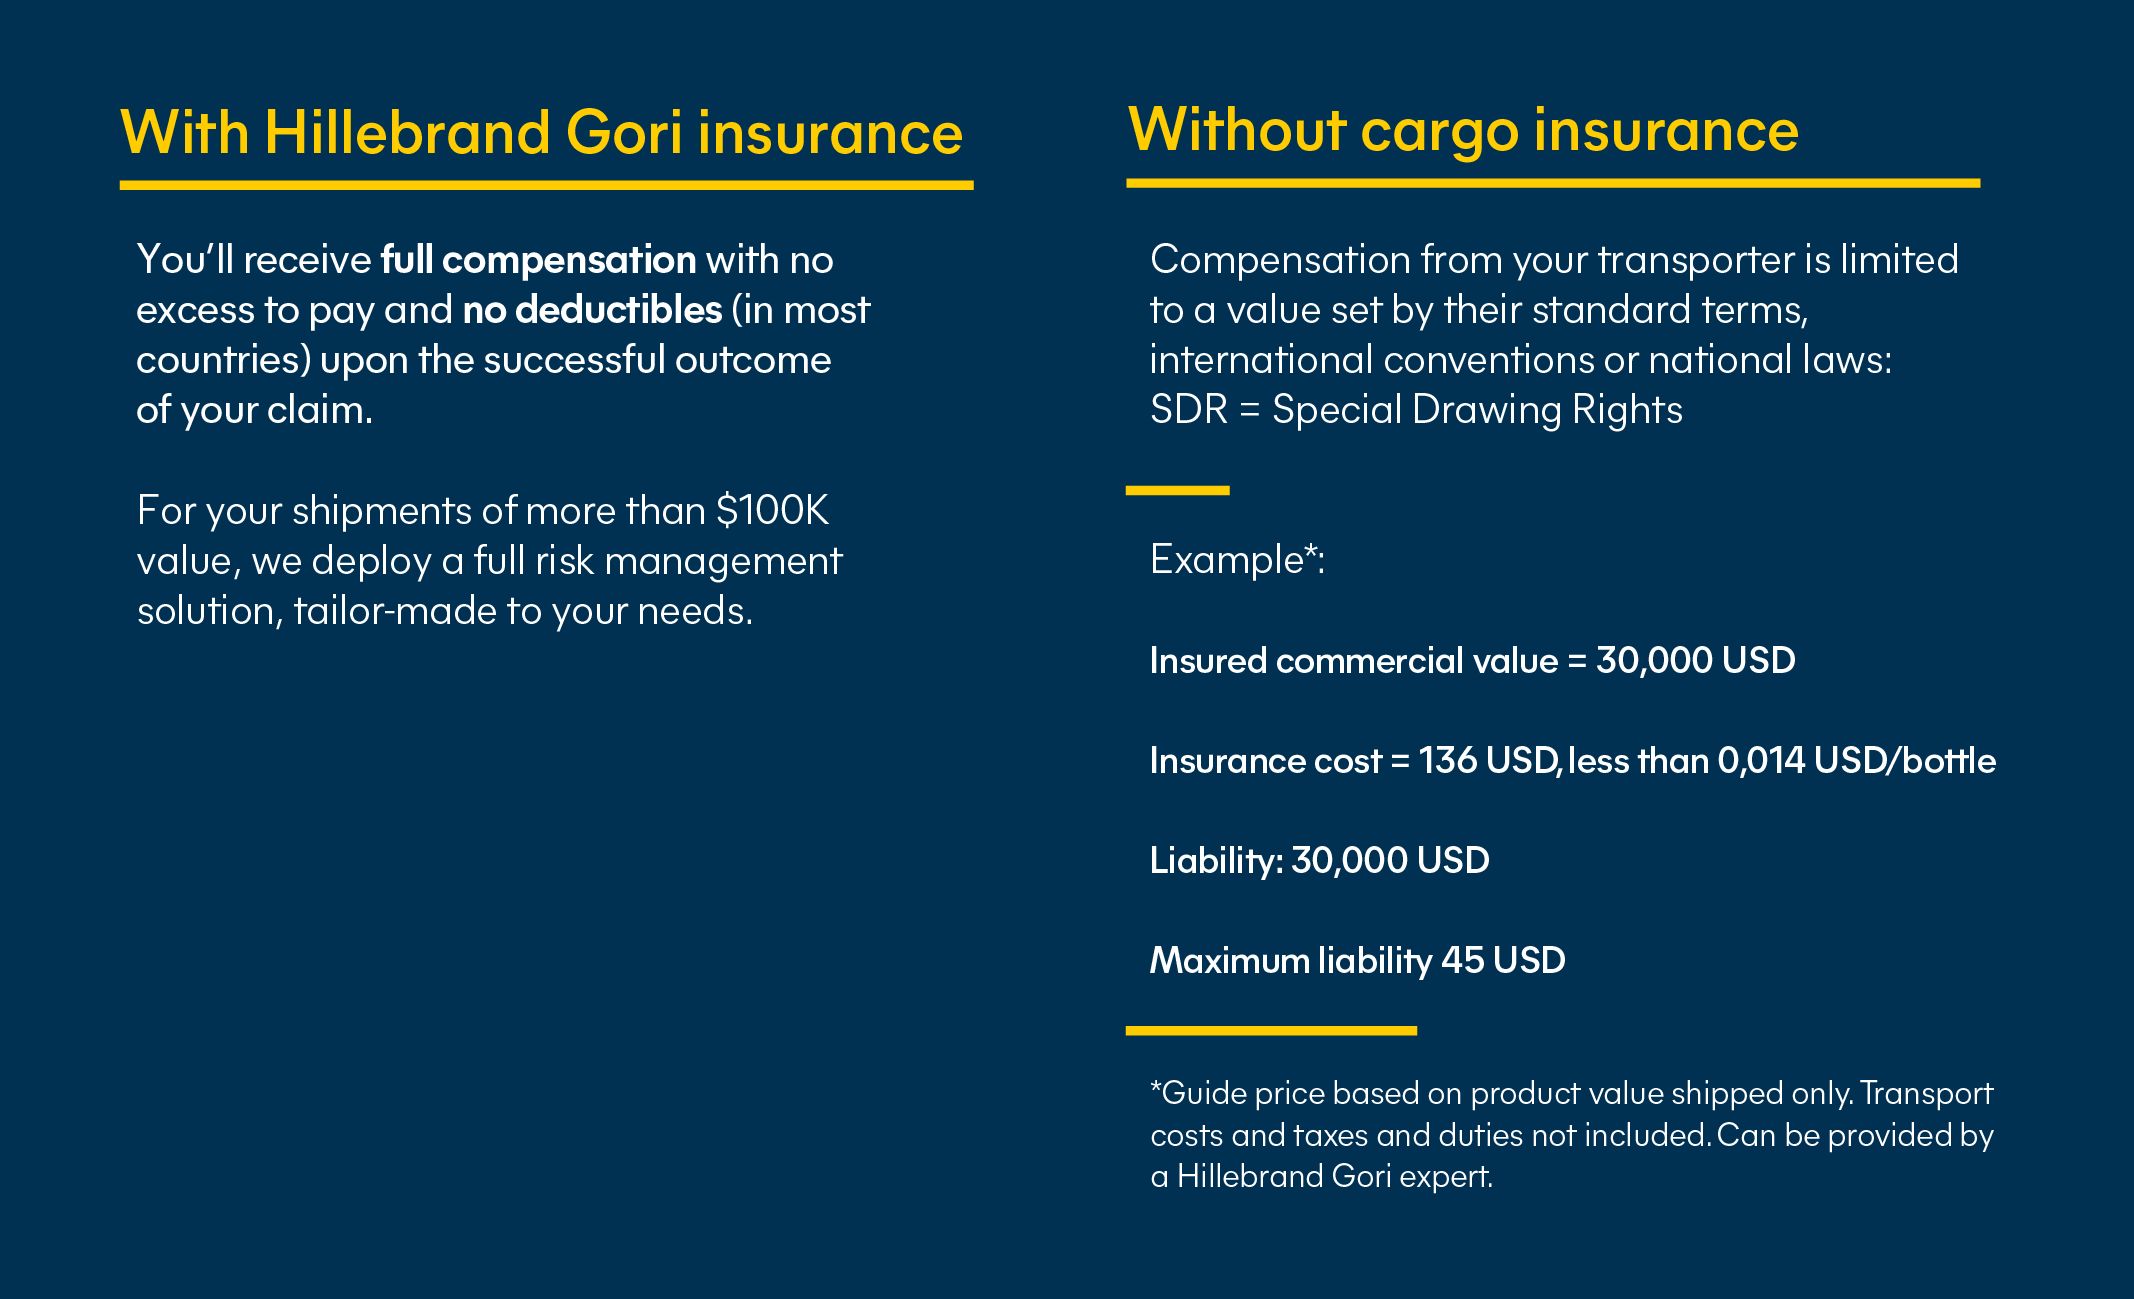 Hillebrand Gori cargo insurance